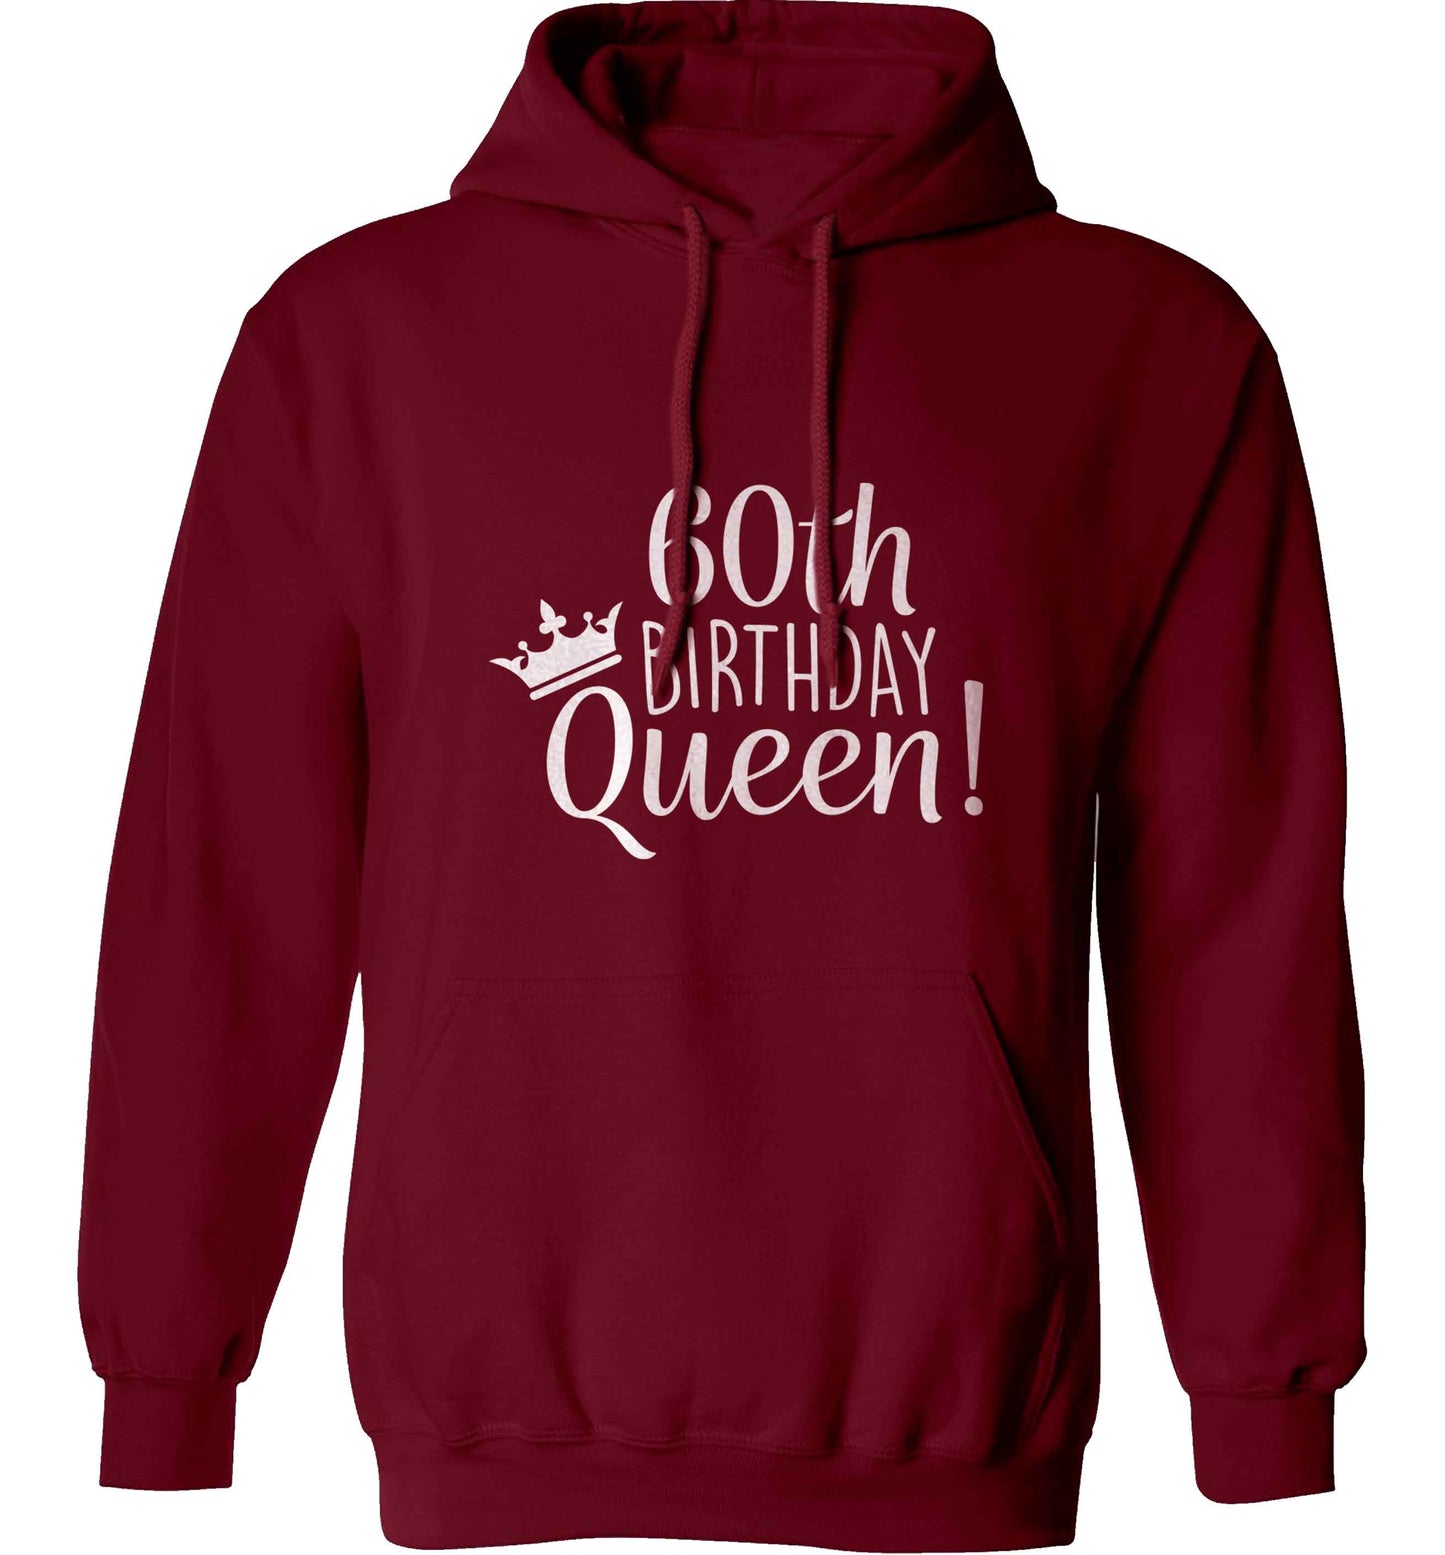 60th birthday Queen adults unisex maroon hoodie 2XL